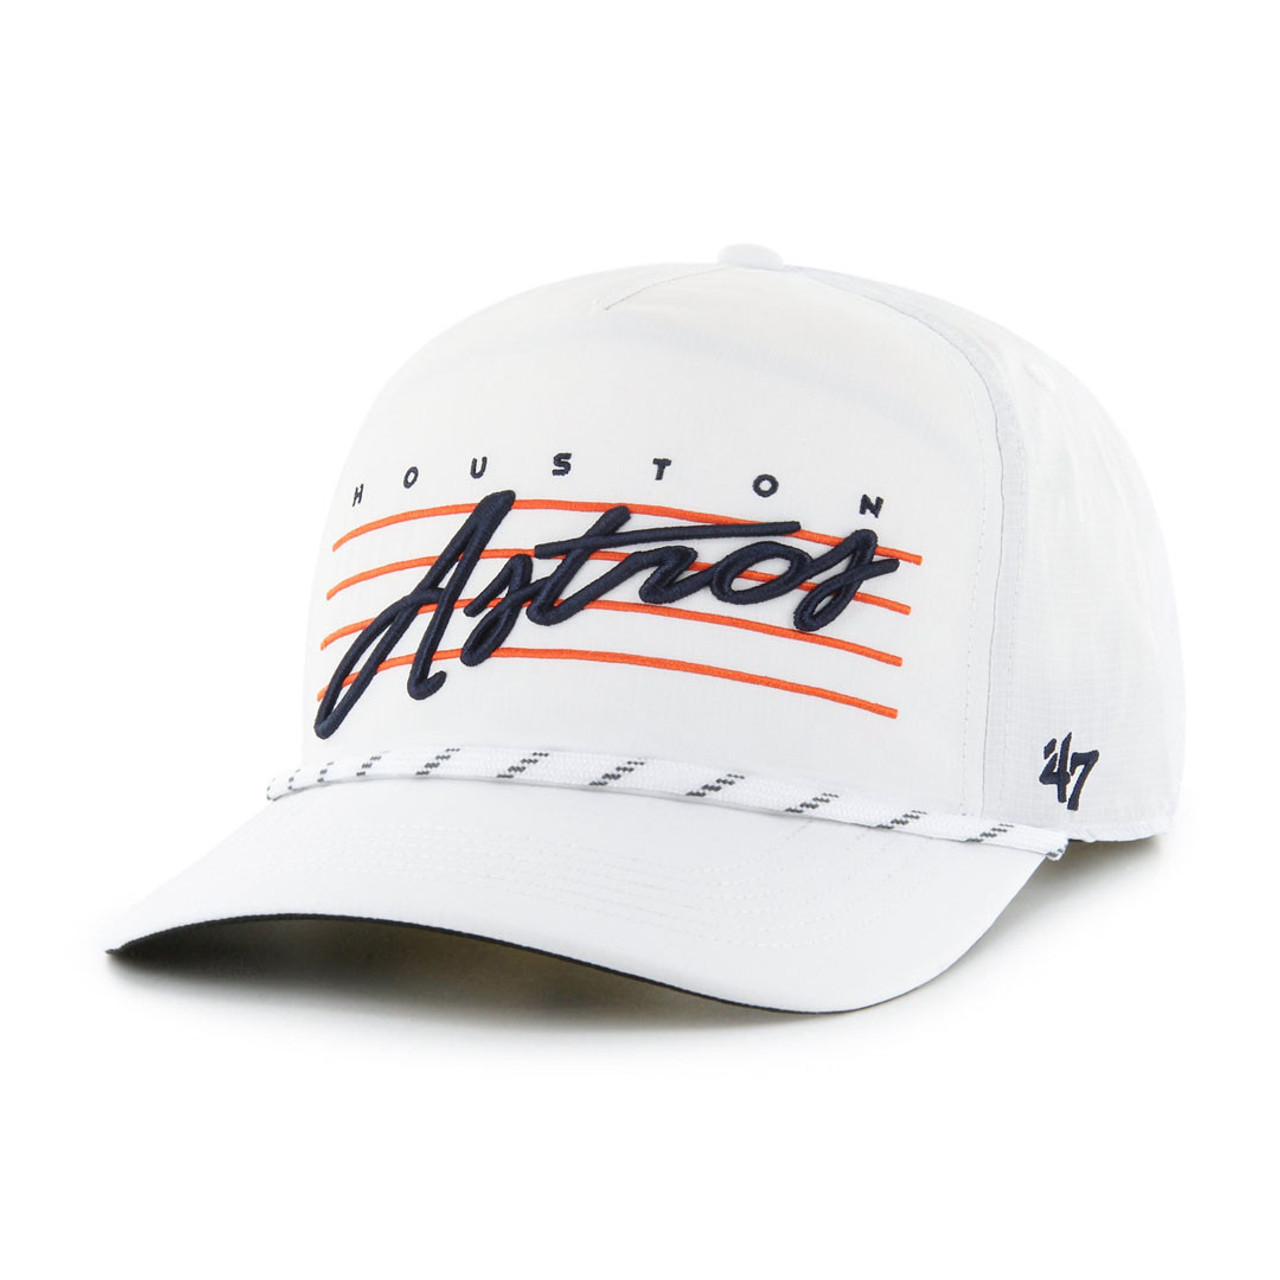 Houston Astros Corduroy Golfer Mens Hat (Grey)